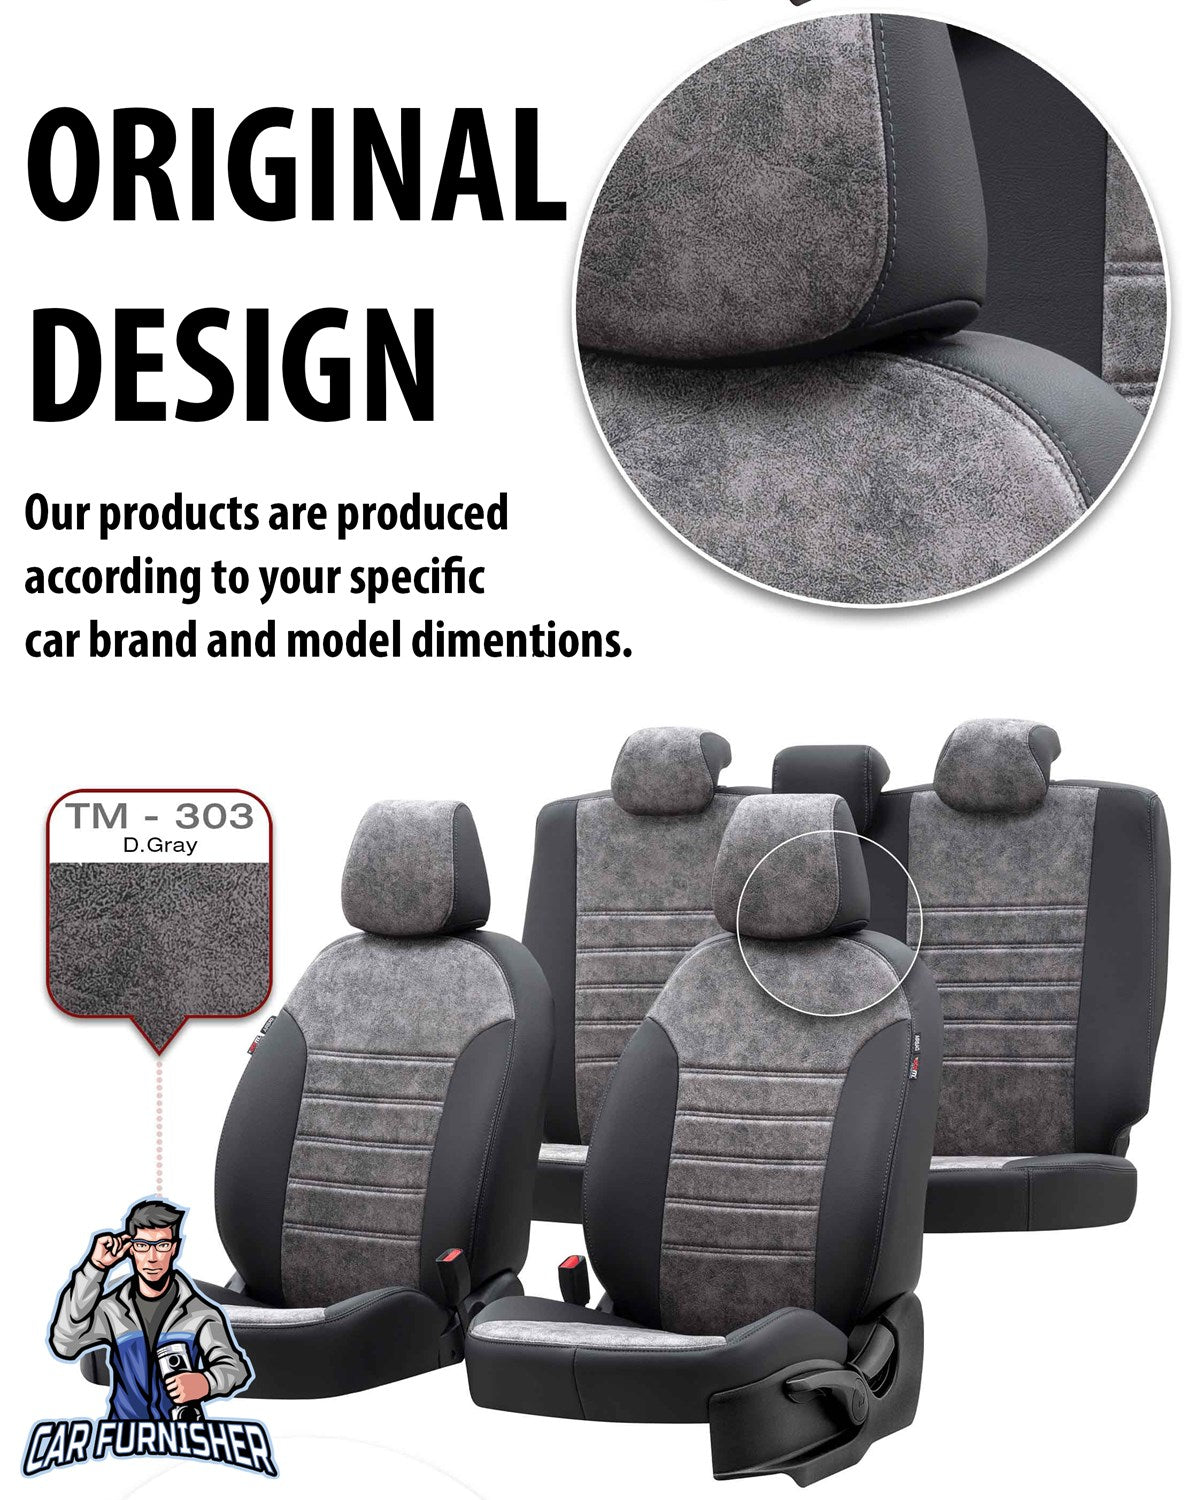 Suzuki Baleno Seat Covers Milano Suede Design Smoked Black Leather & Suede Fabric